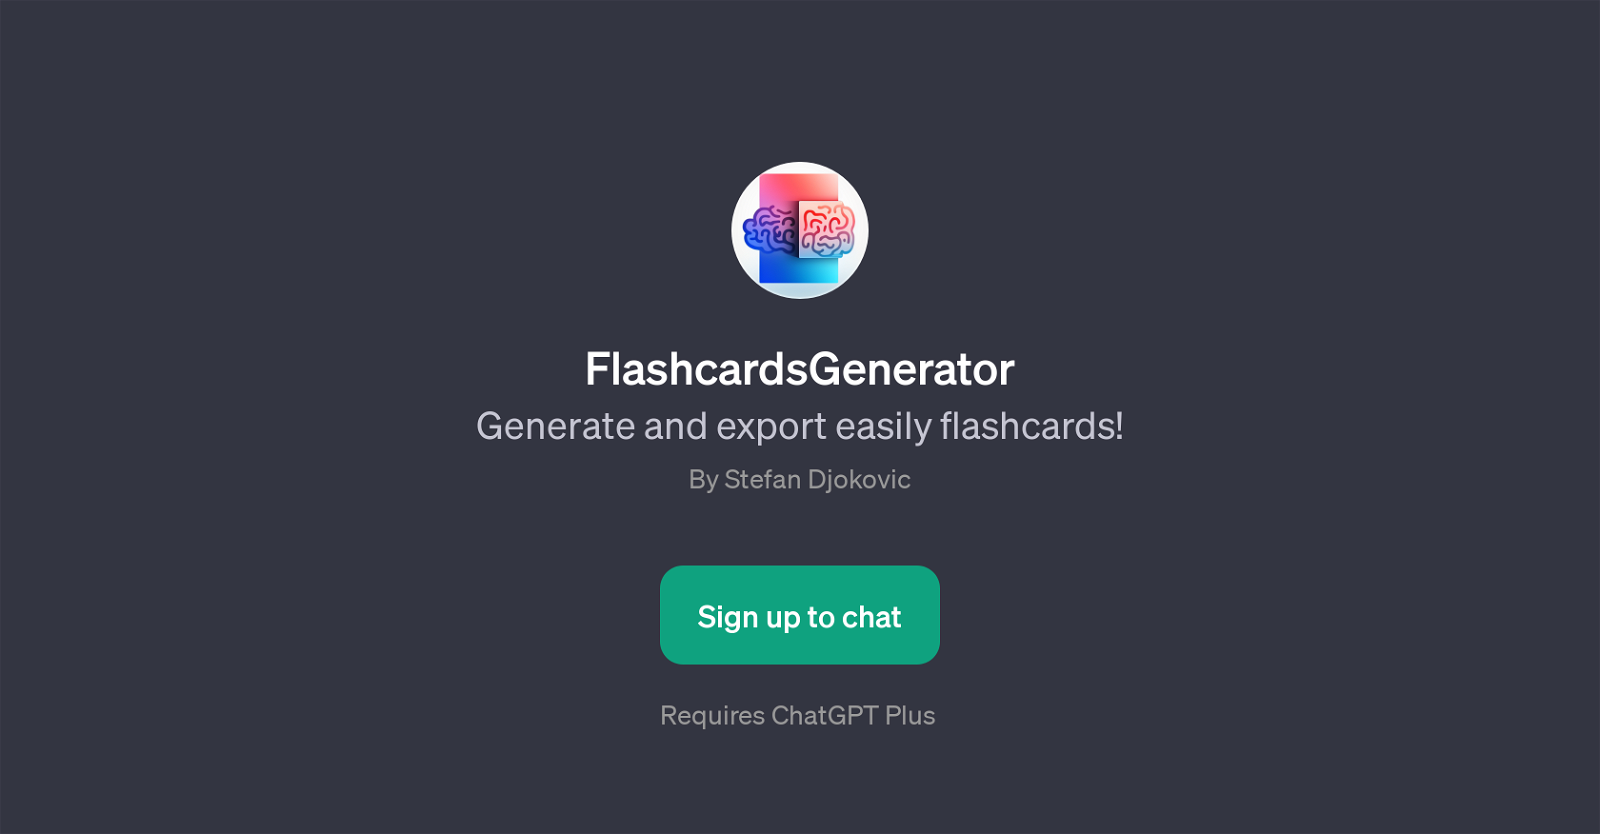 FlashcardsGenerator website